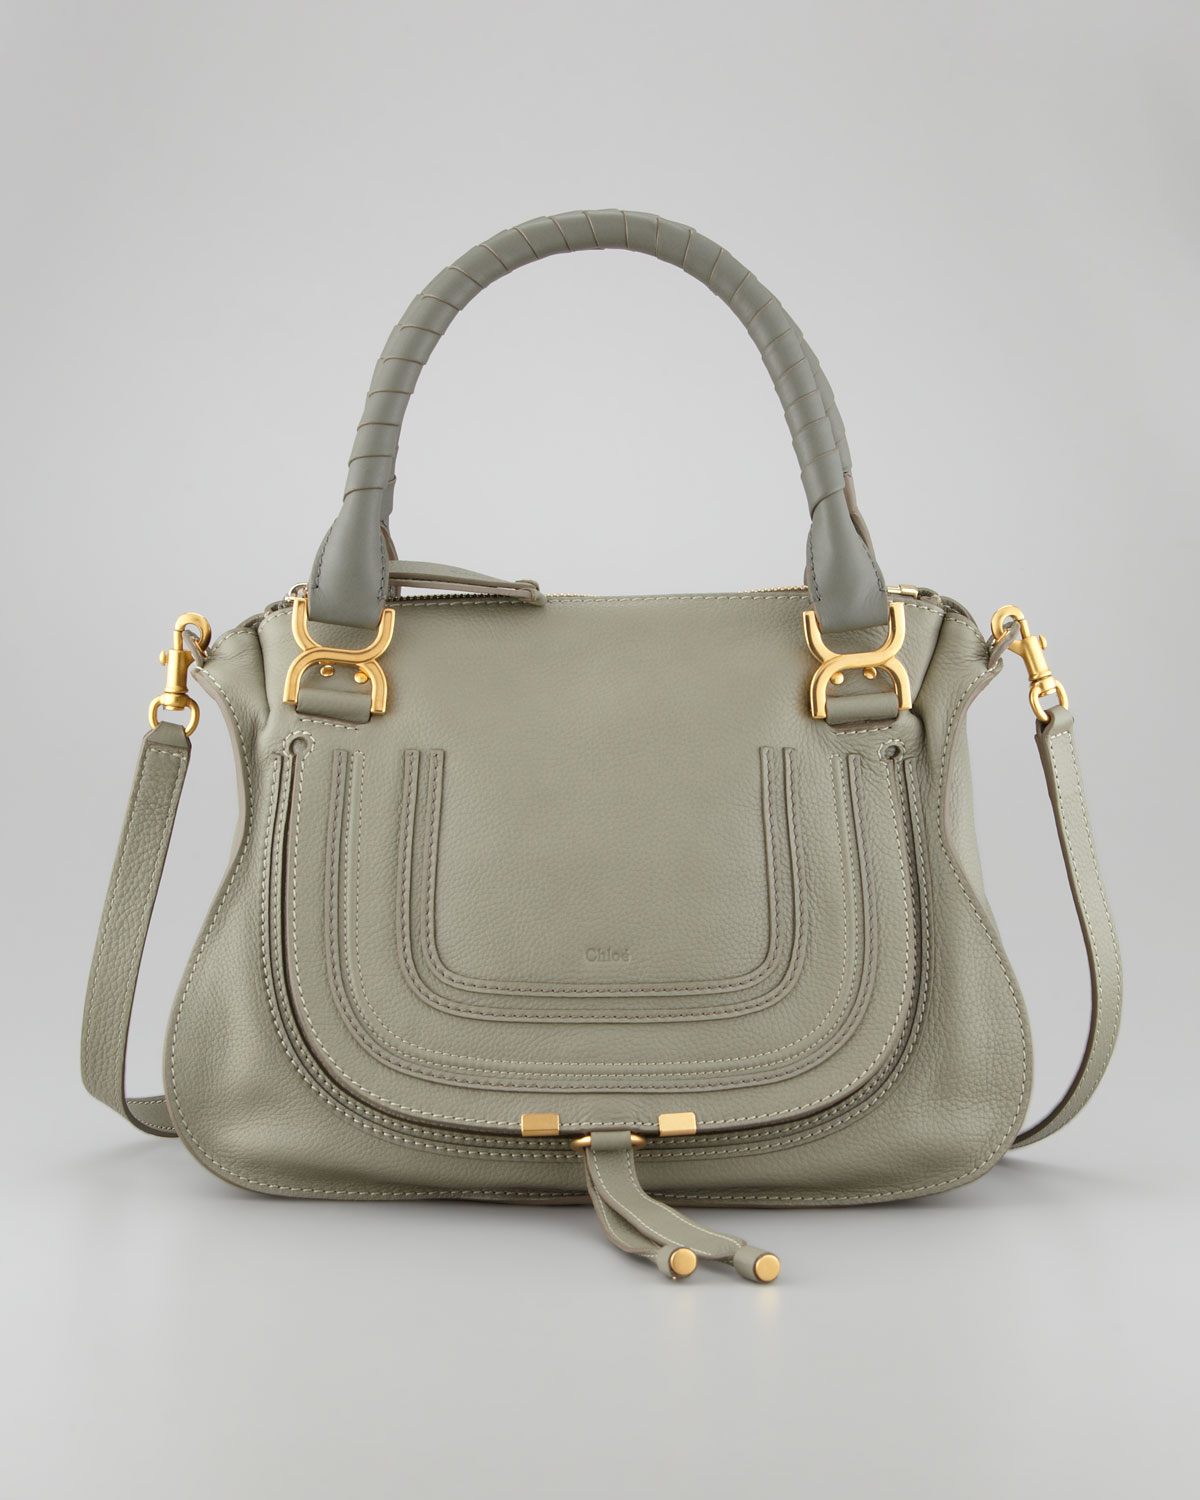 imitation chloe handbags - chloe turn-lock marcie satchel, chloe purse